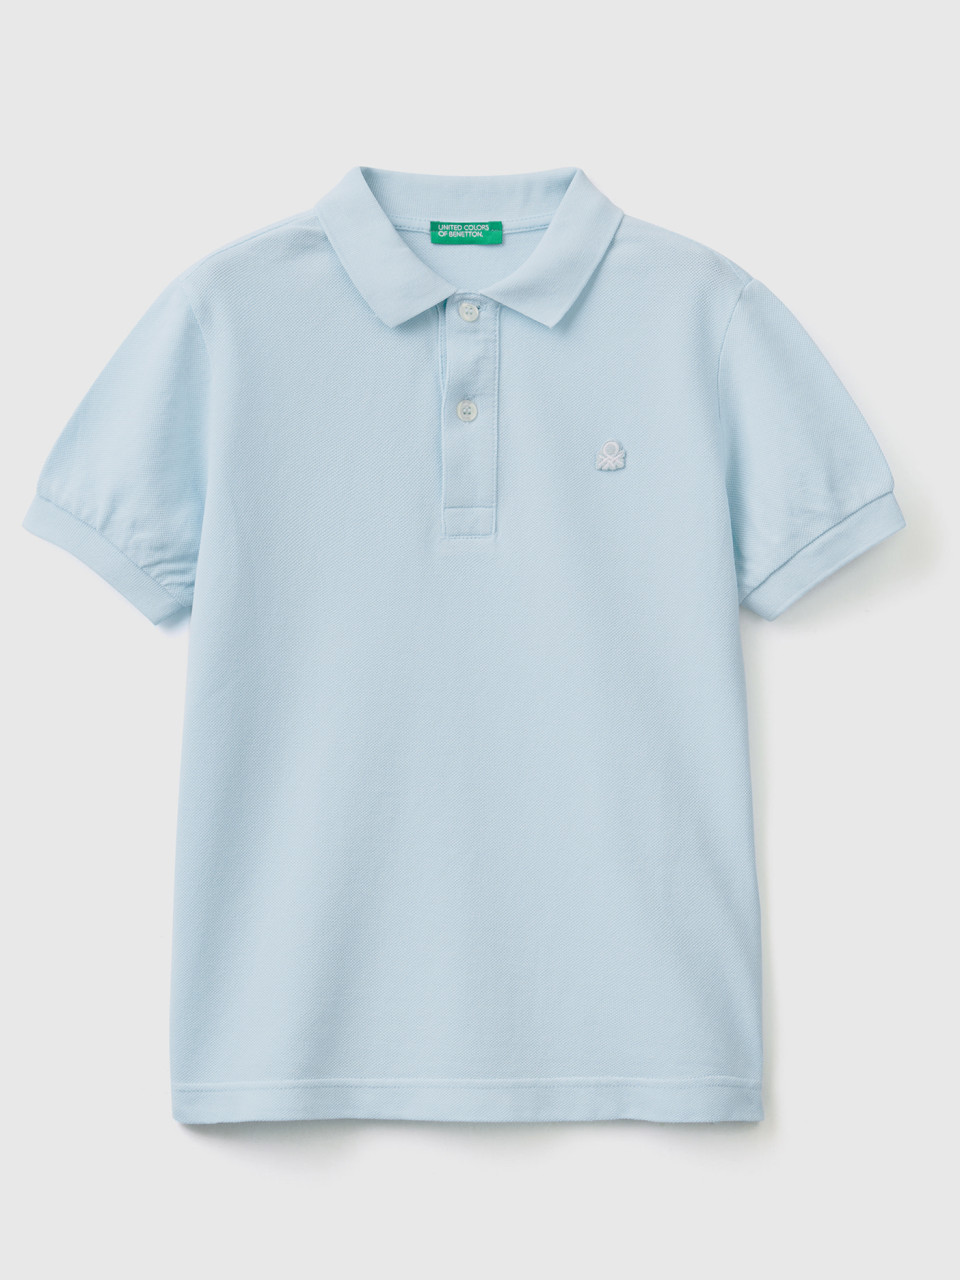 Benetton, Slim Fit Polo In 100% Organic Cotton, Sky Blue, Kids